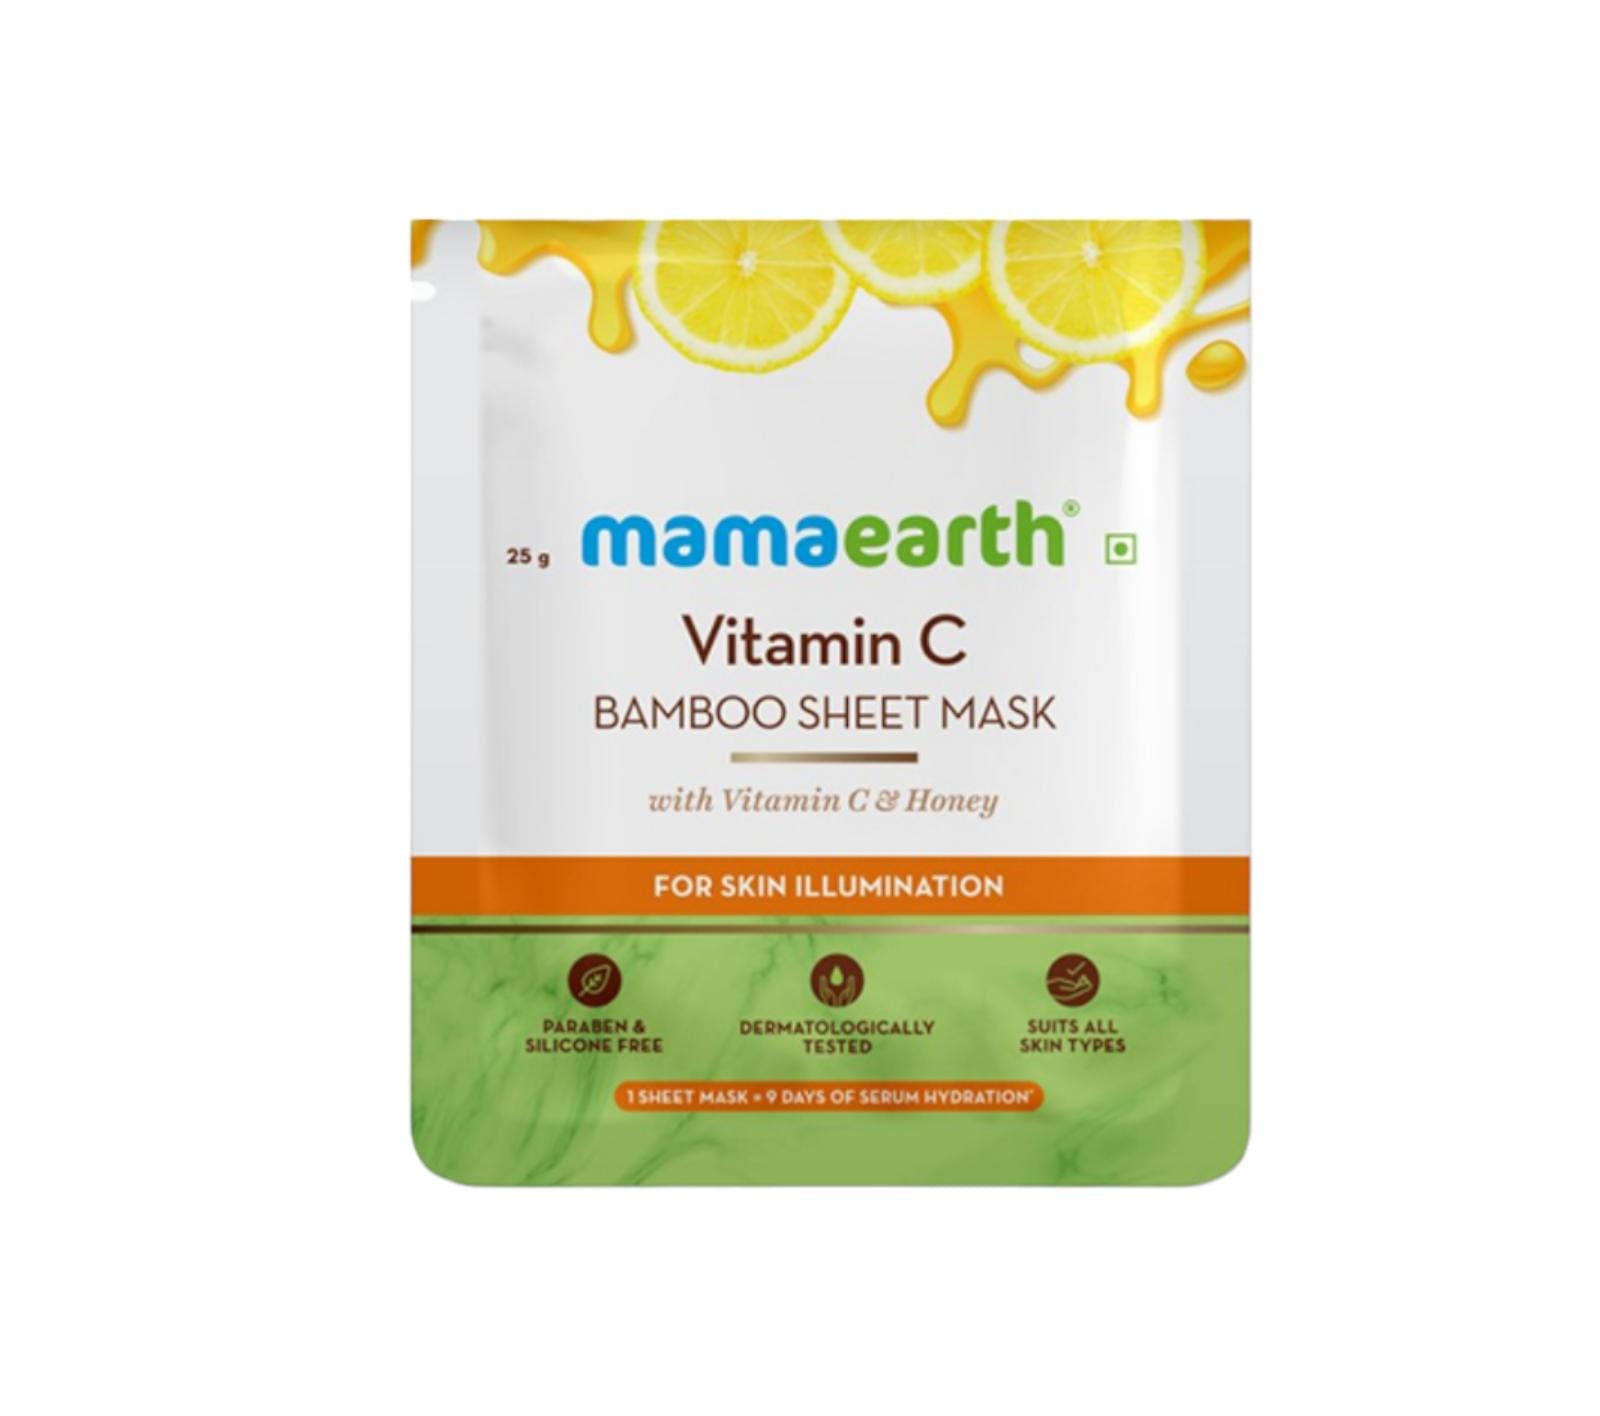 Mama earth Vitamin C Bamboo Mask sheet